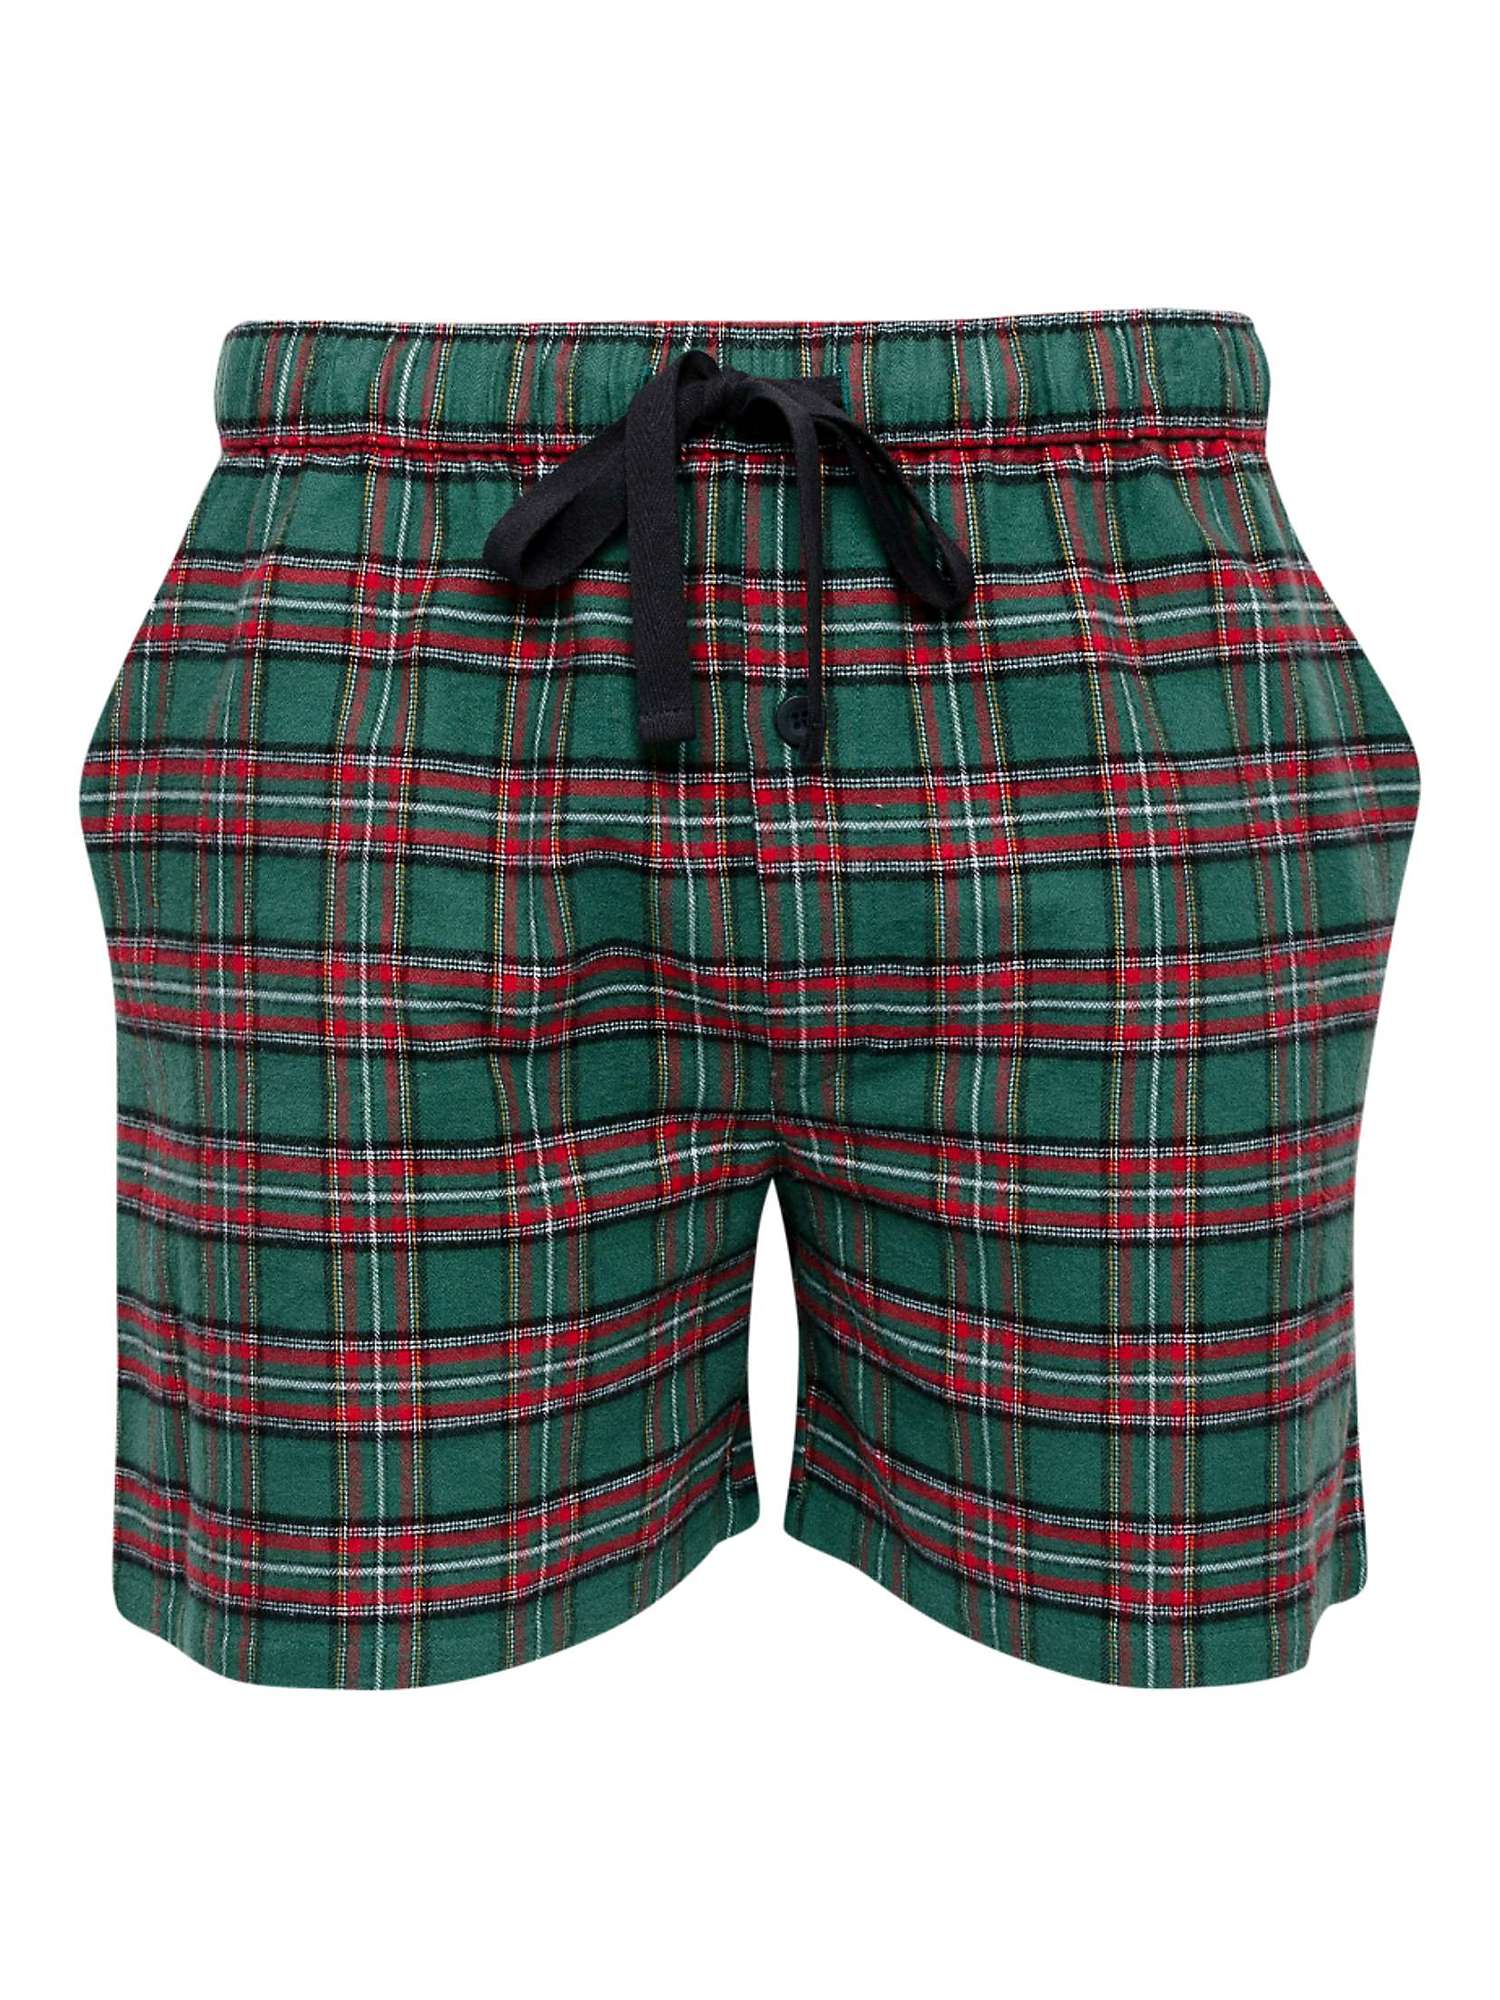 Buy Cyberjammies Whistler Check Pyjama Shorts, Dark Green/Red Online at johnlewis.com